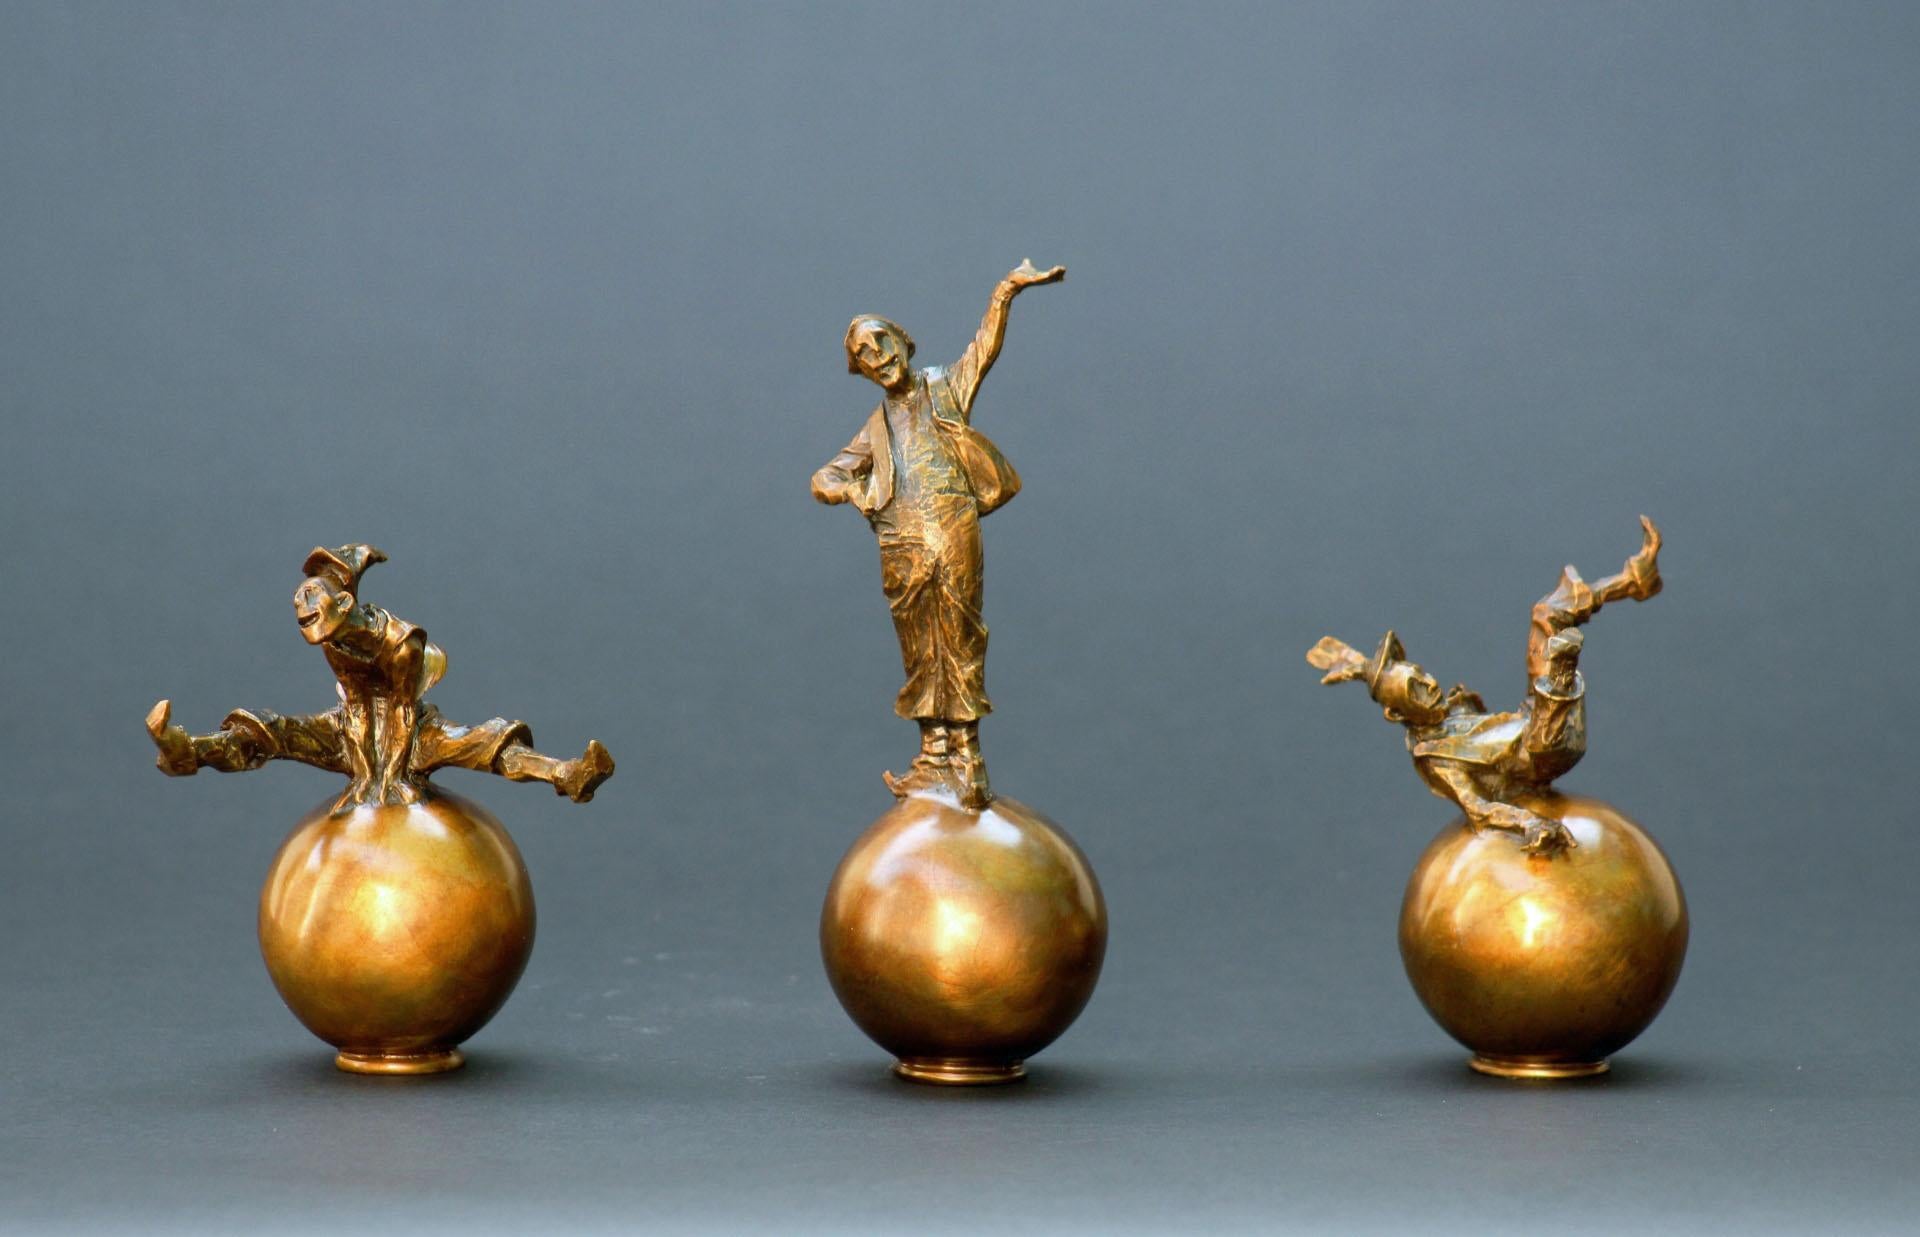 Craig Campbell Figurative Sculpture - On the Ball Series, 8" high bronze set of 3